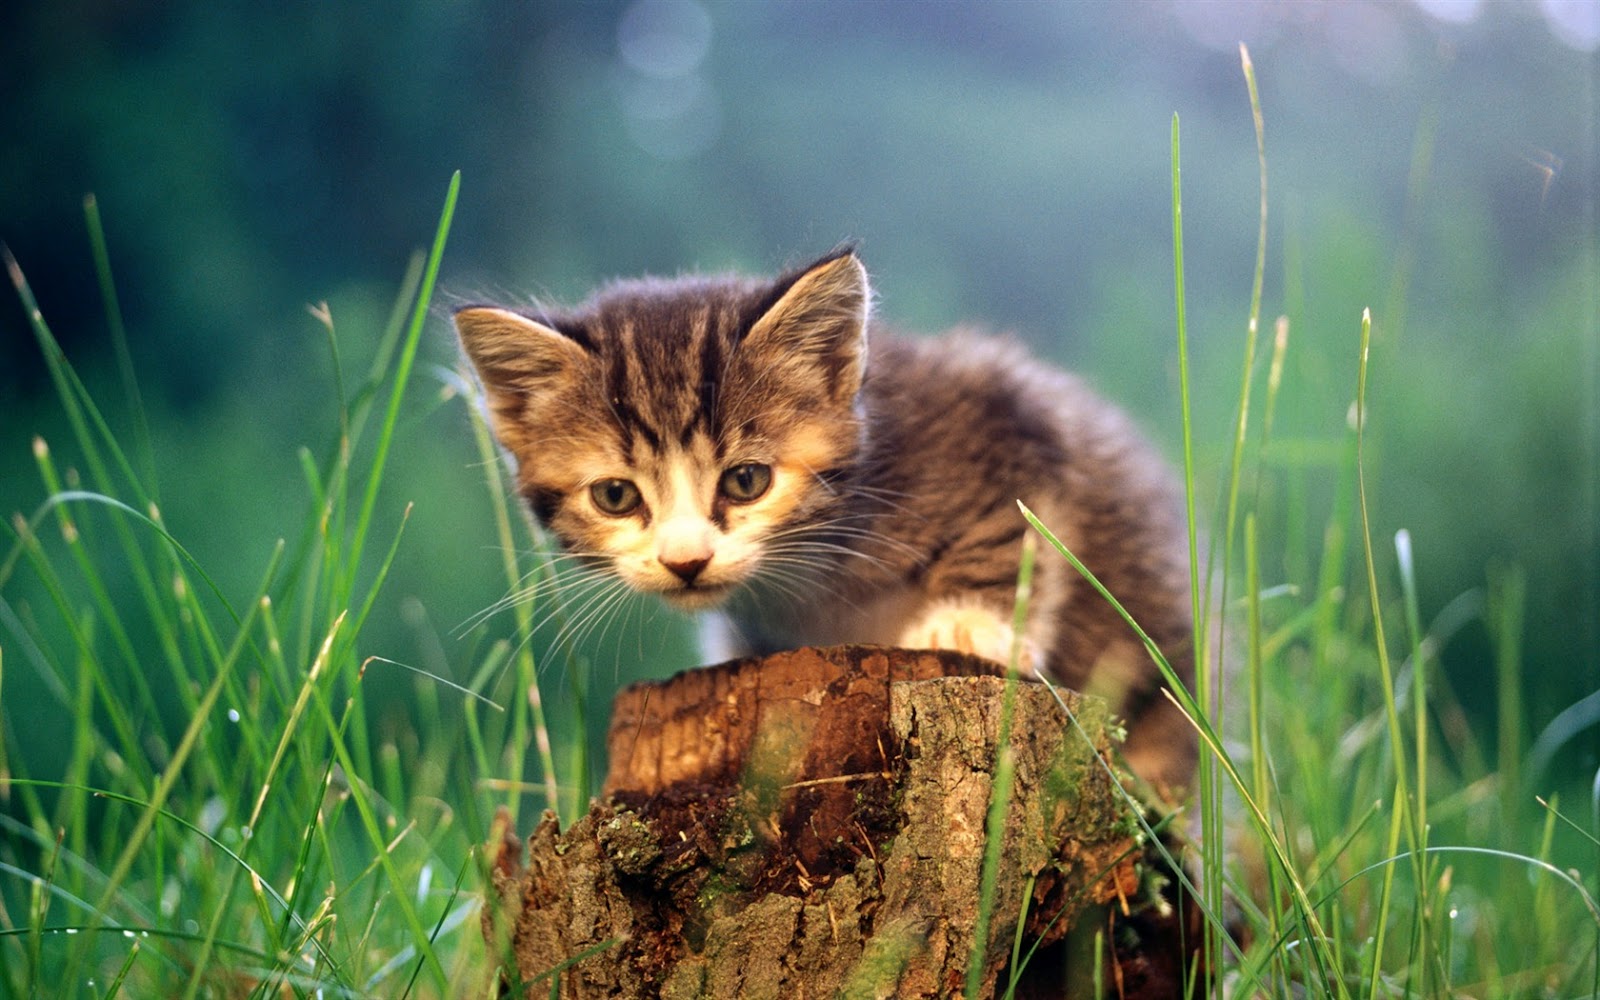 shy-little-kitten-pictures-of-animals.jpg